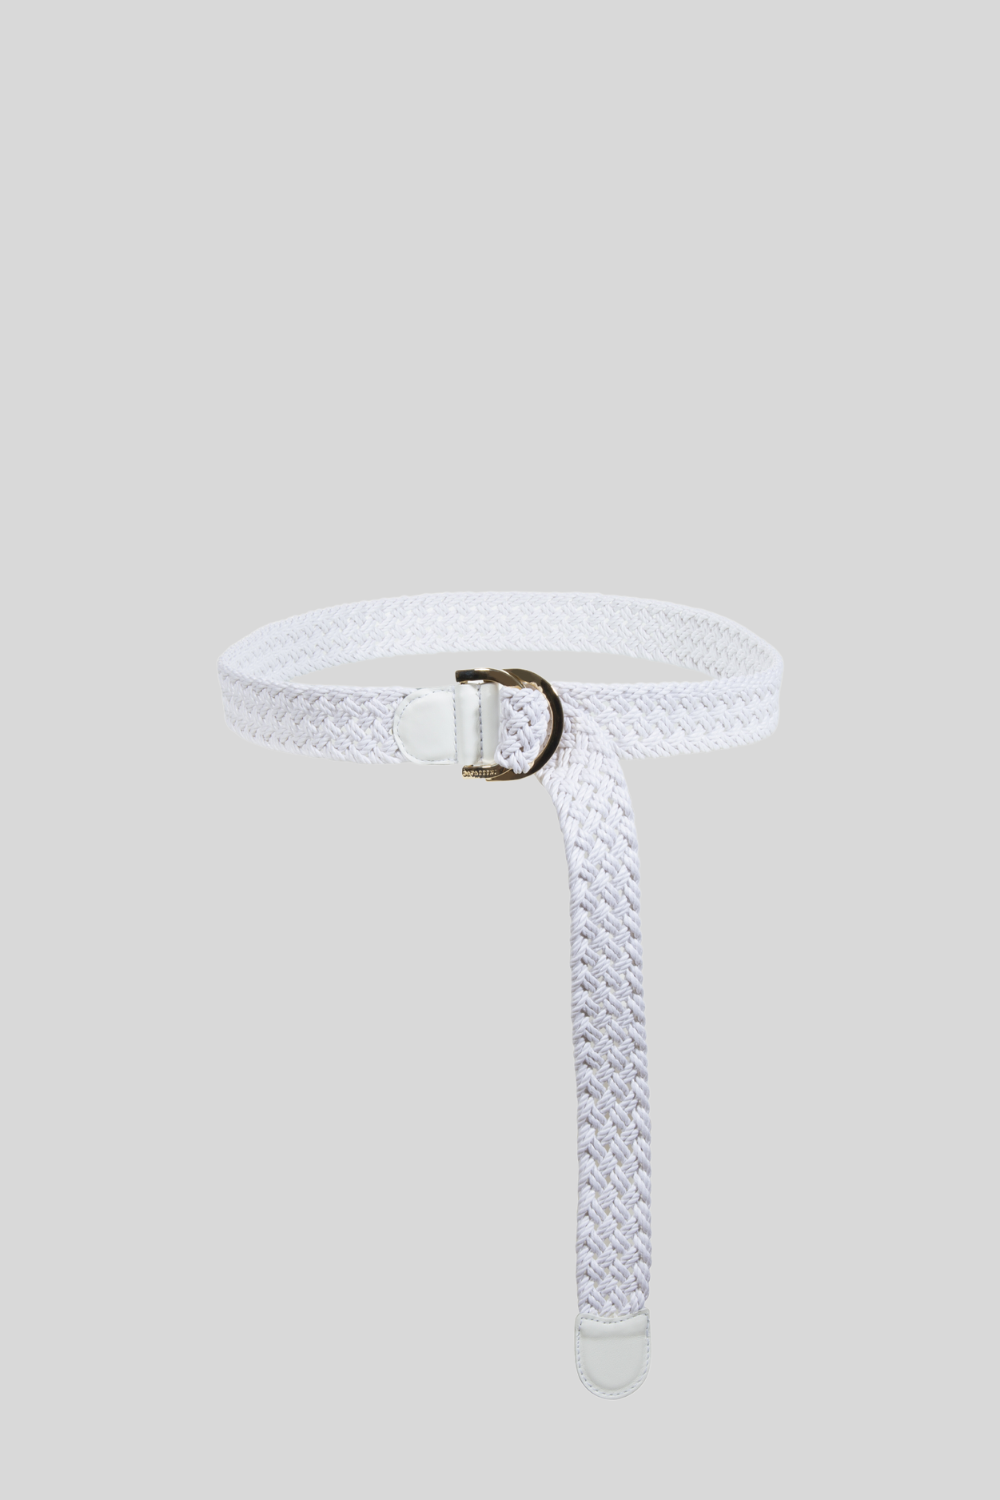 Mikonos Belt in White Cotton Ribbon